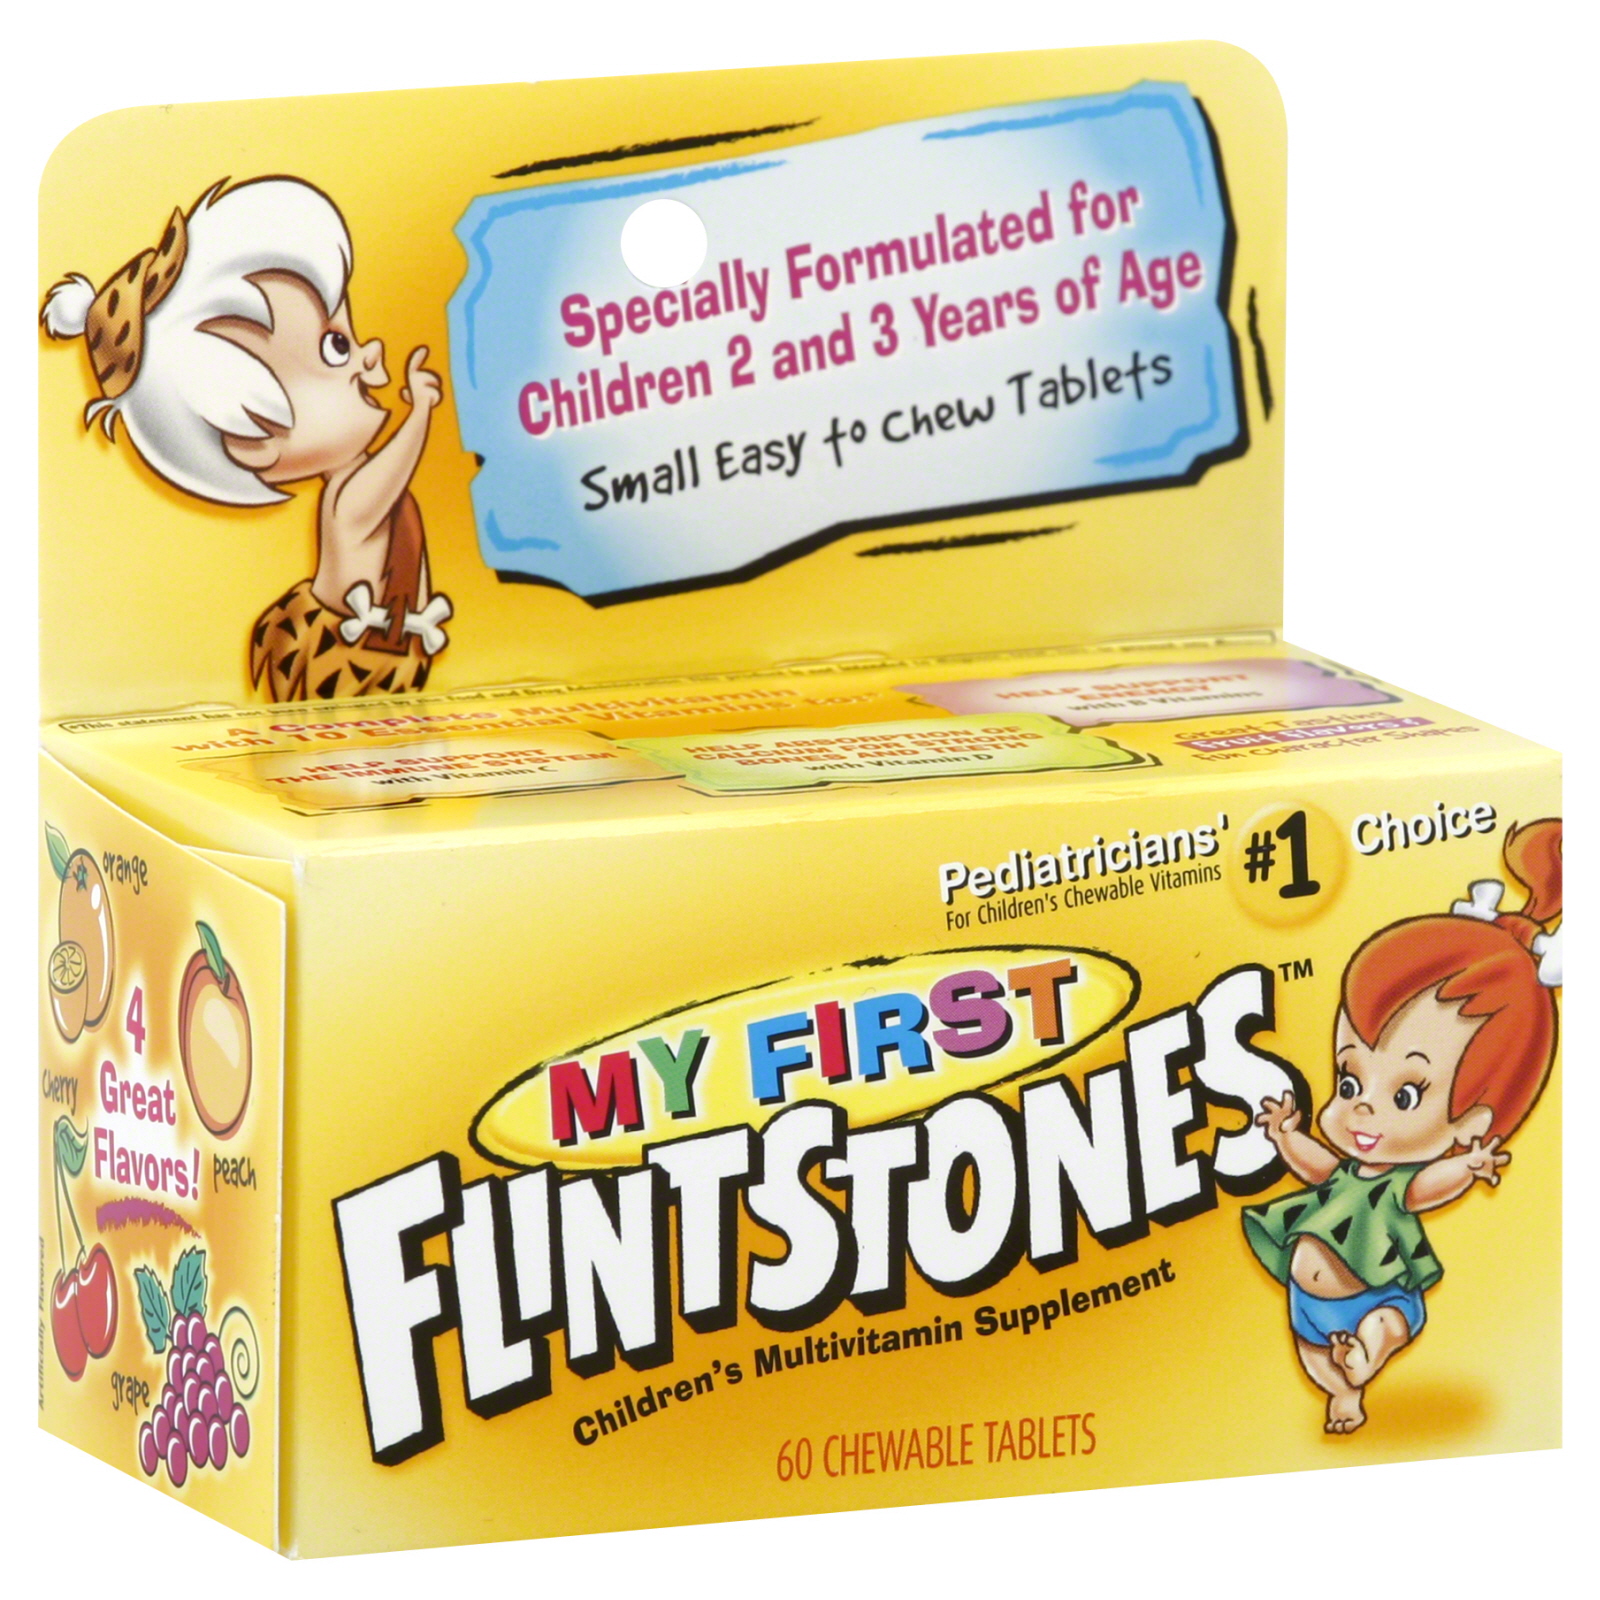 Flintstones Bayer HealthCare Multivitamin, Children's, My First , Chewable Tablets, 60 tablets